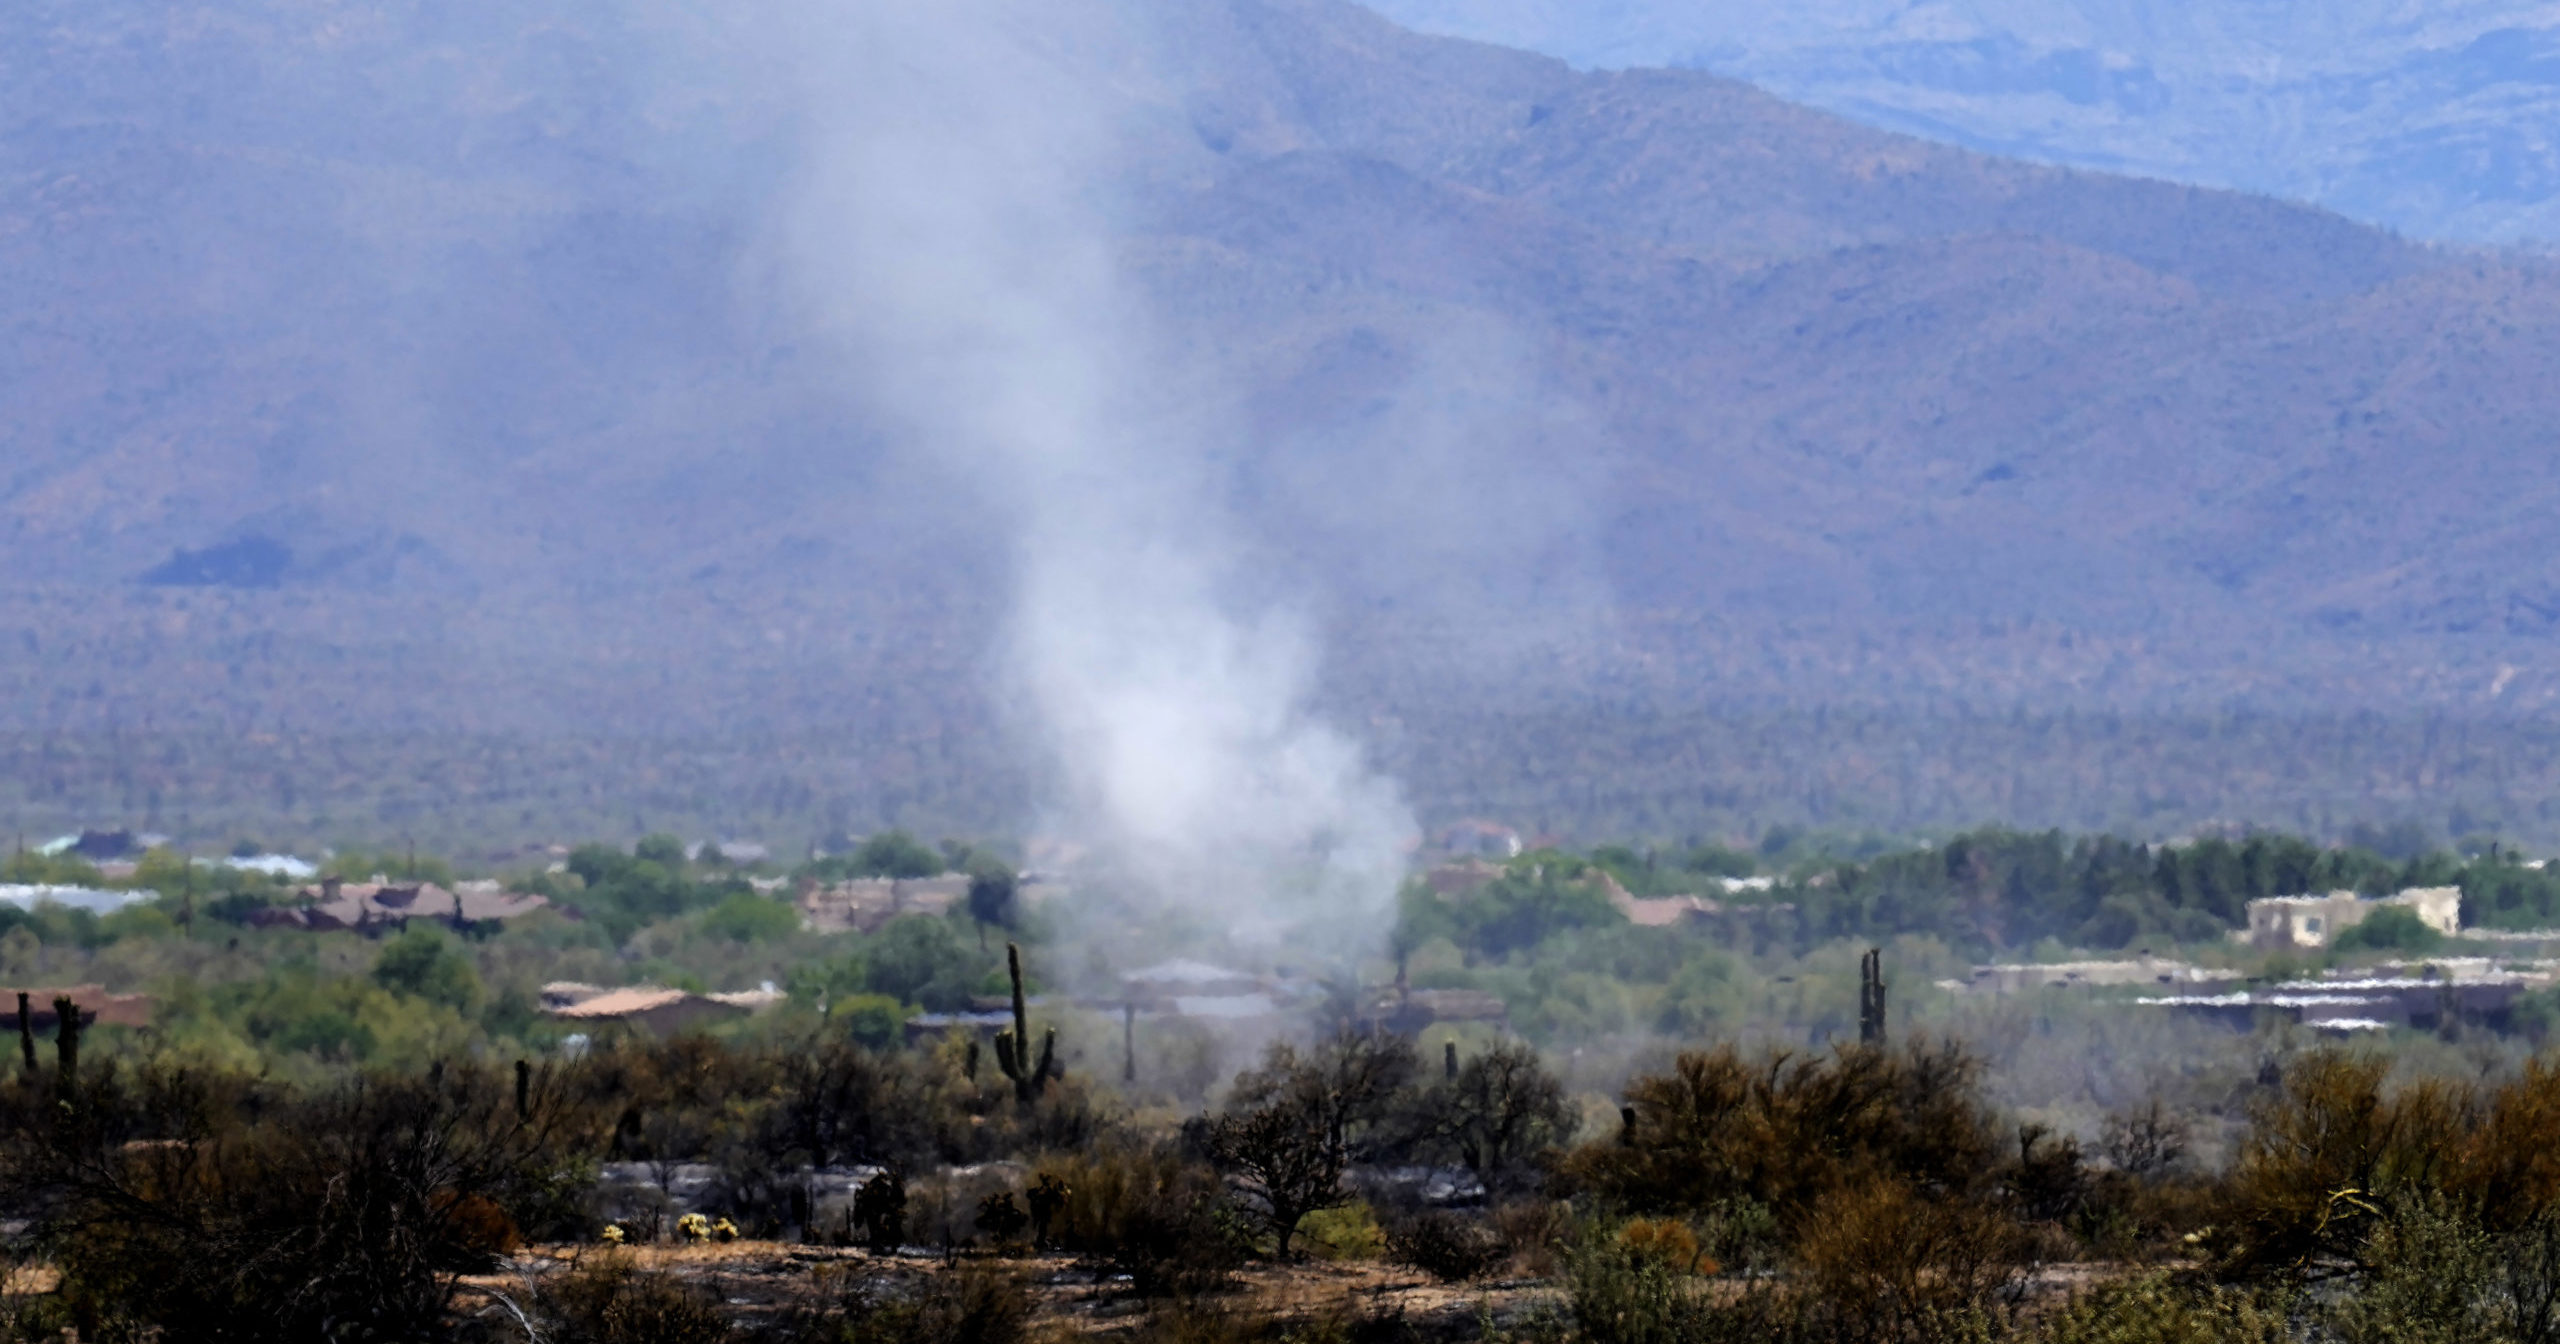 Smoke rises from the Diamond fire that caused mandatory evacuations Wednesday in Scottsdale, Arizona.